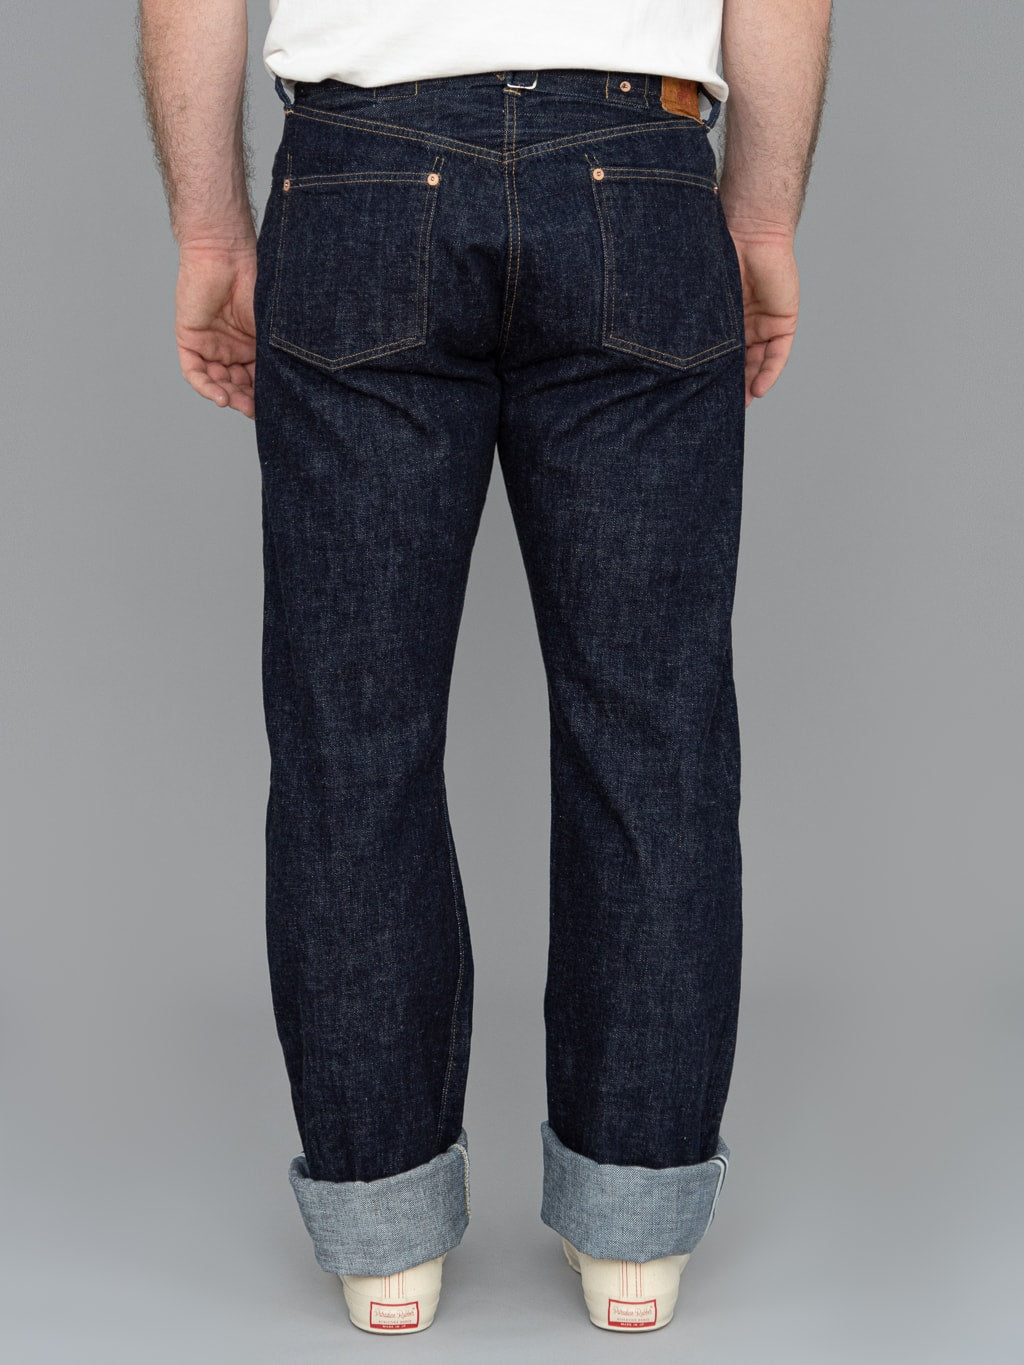 TCB 20s indigo Jeans one wash vintage style back fit